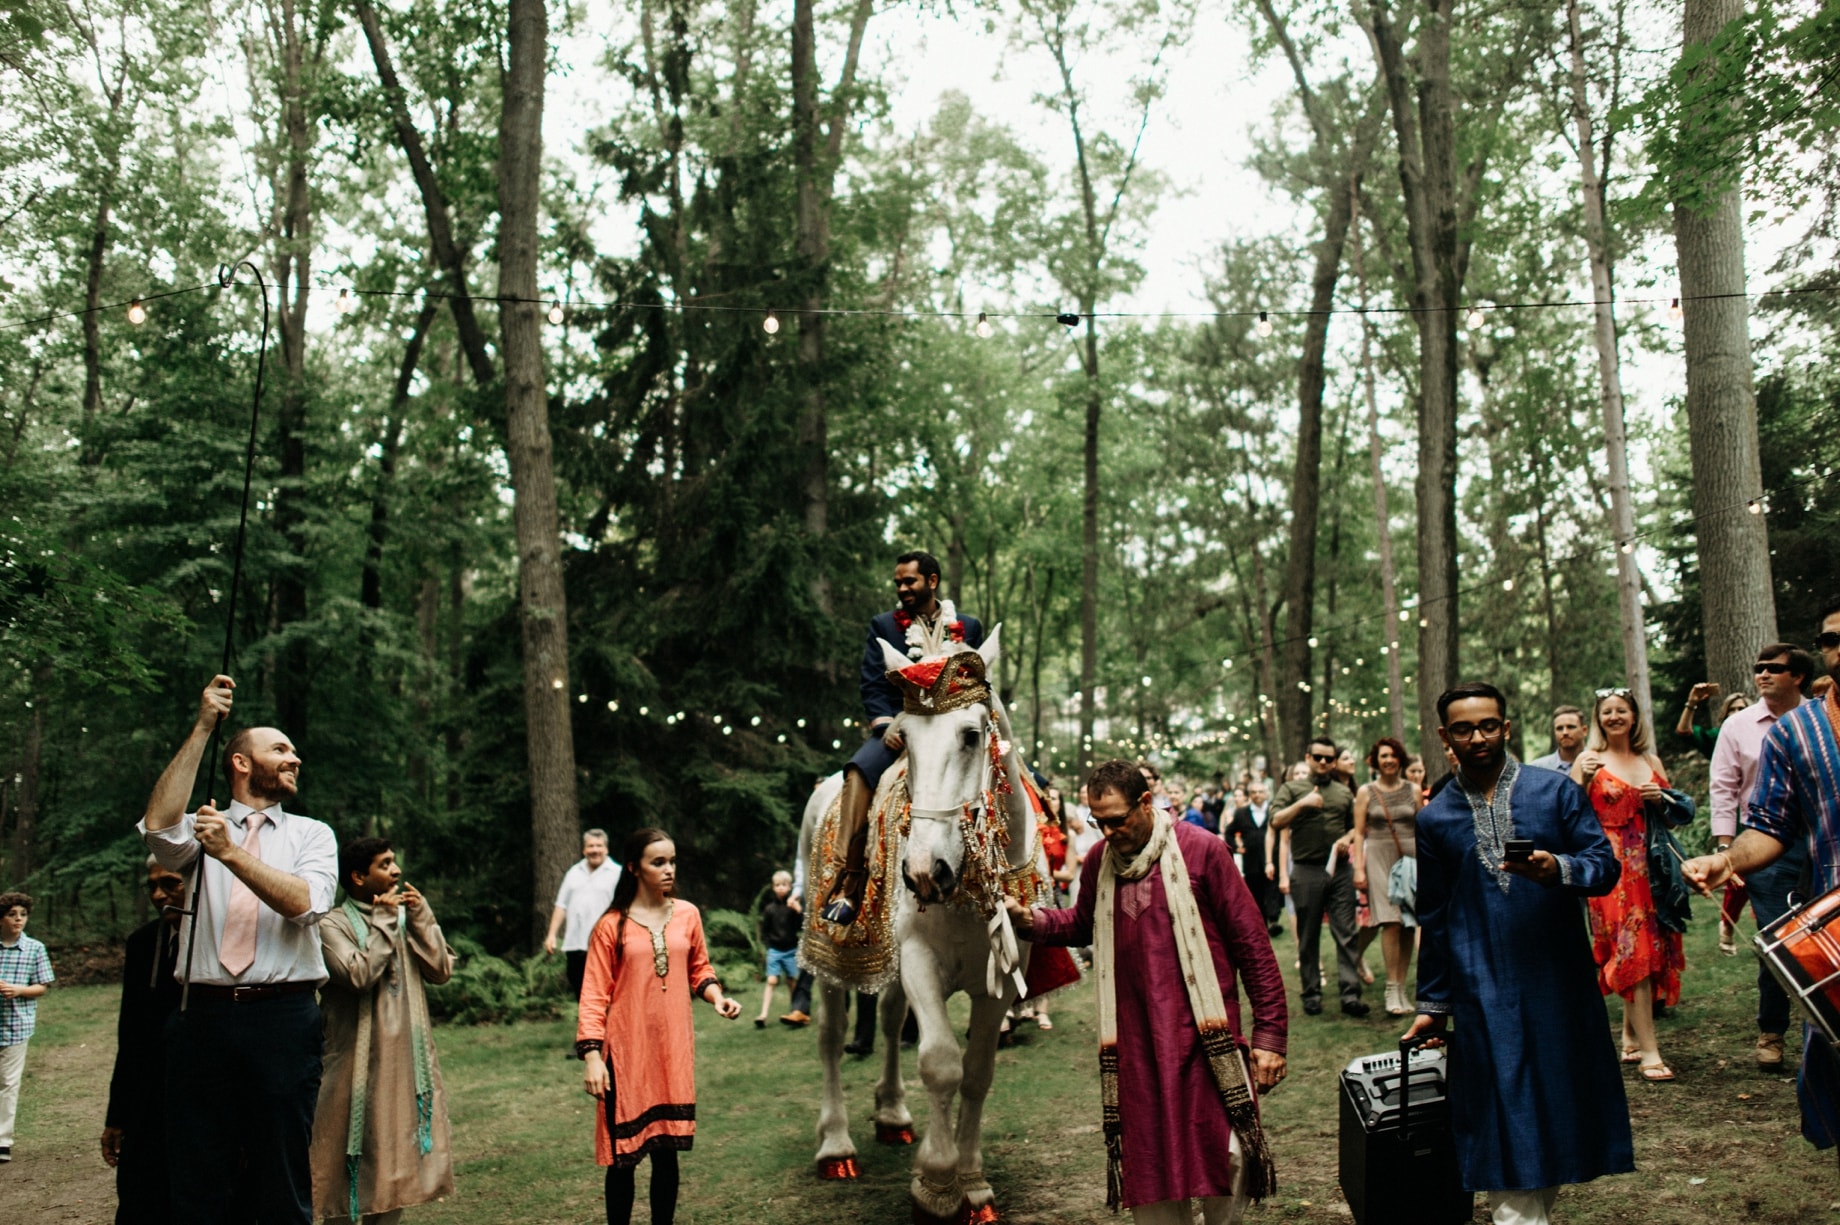 groom entering wedding ceremony on horseback